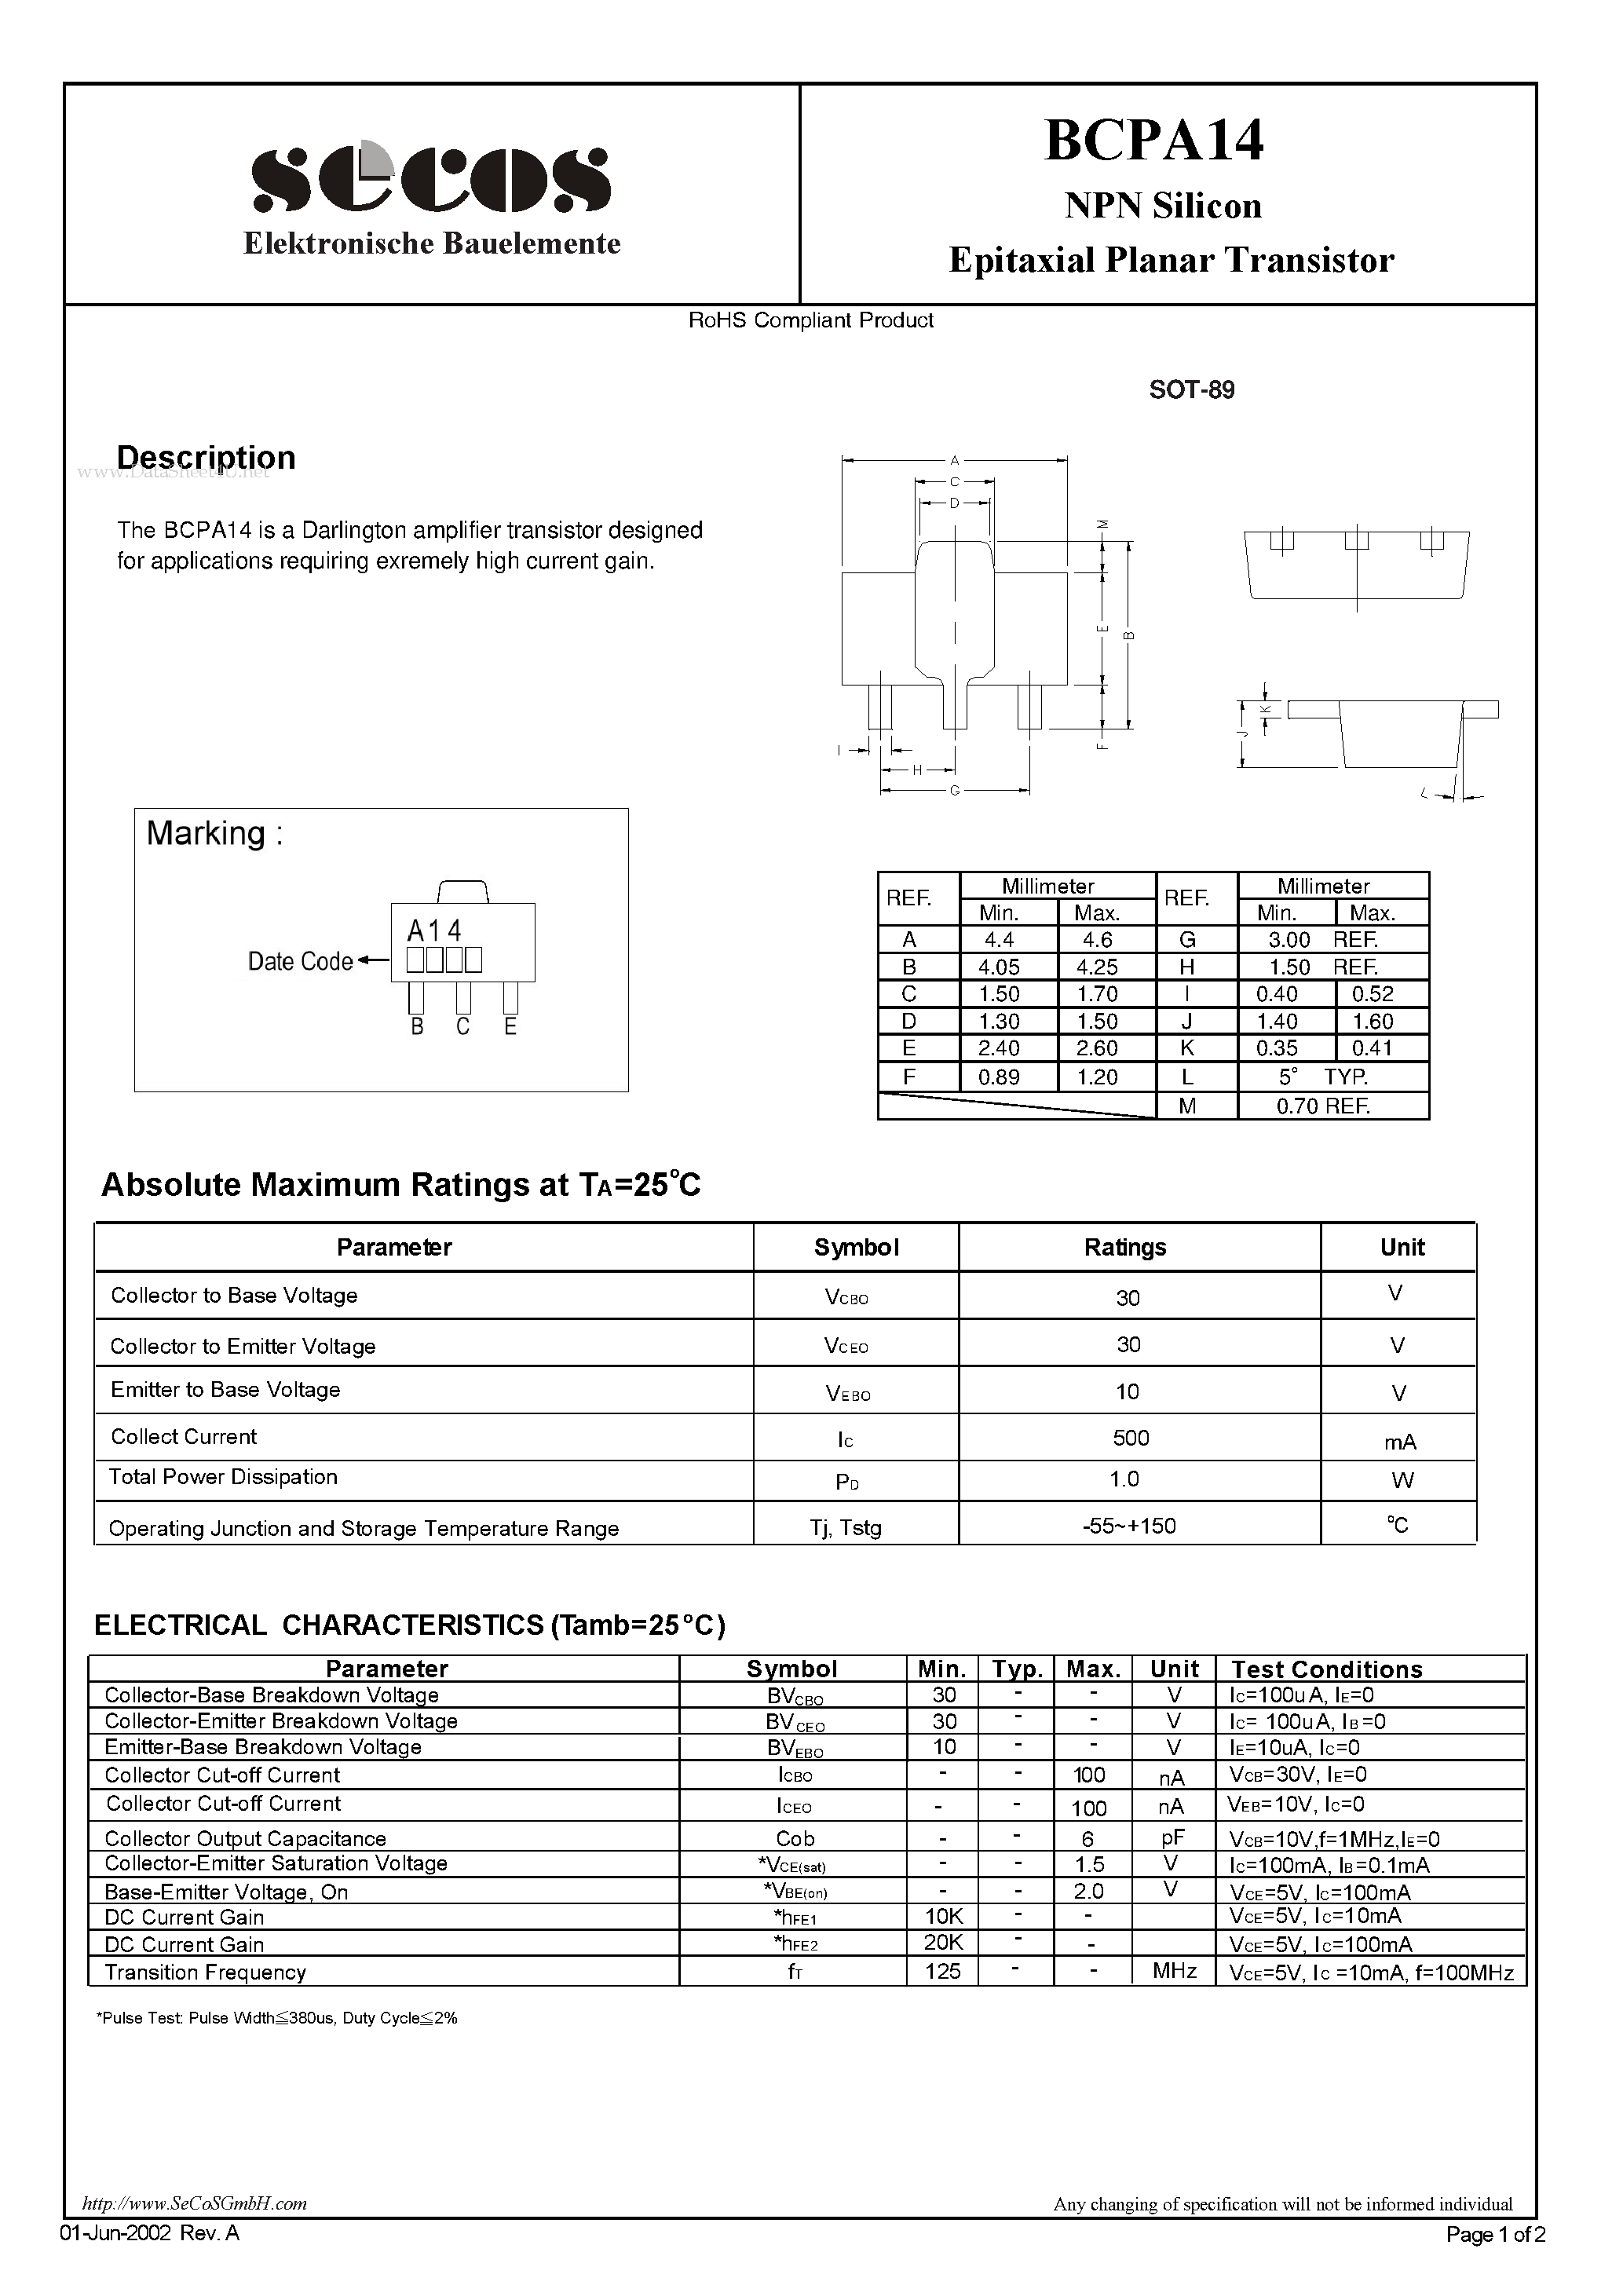 Datasheet BCPA14 - Epitaxial Planar Transistor page 1